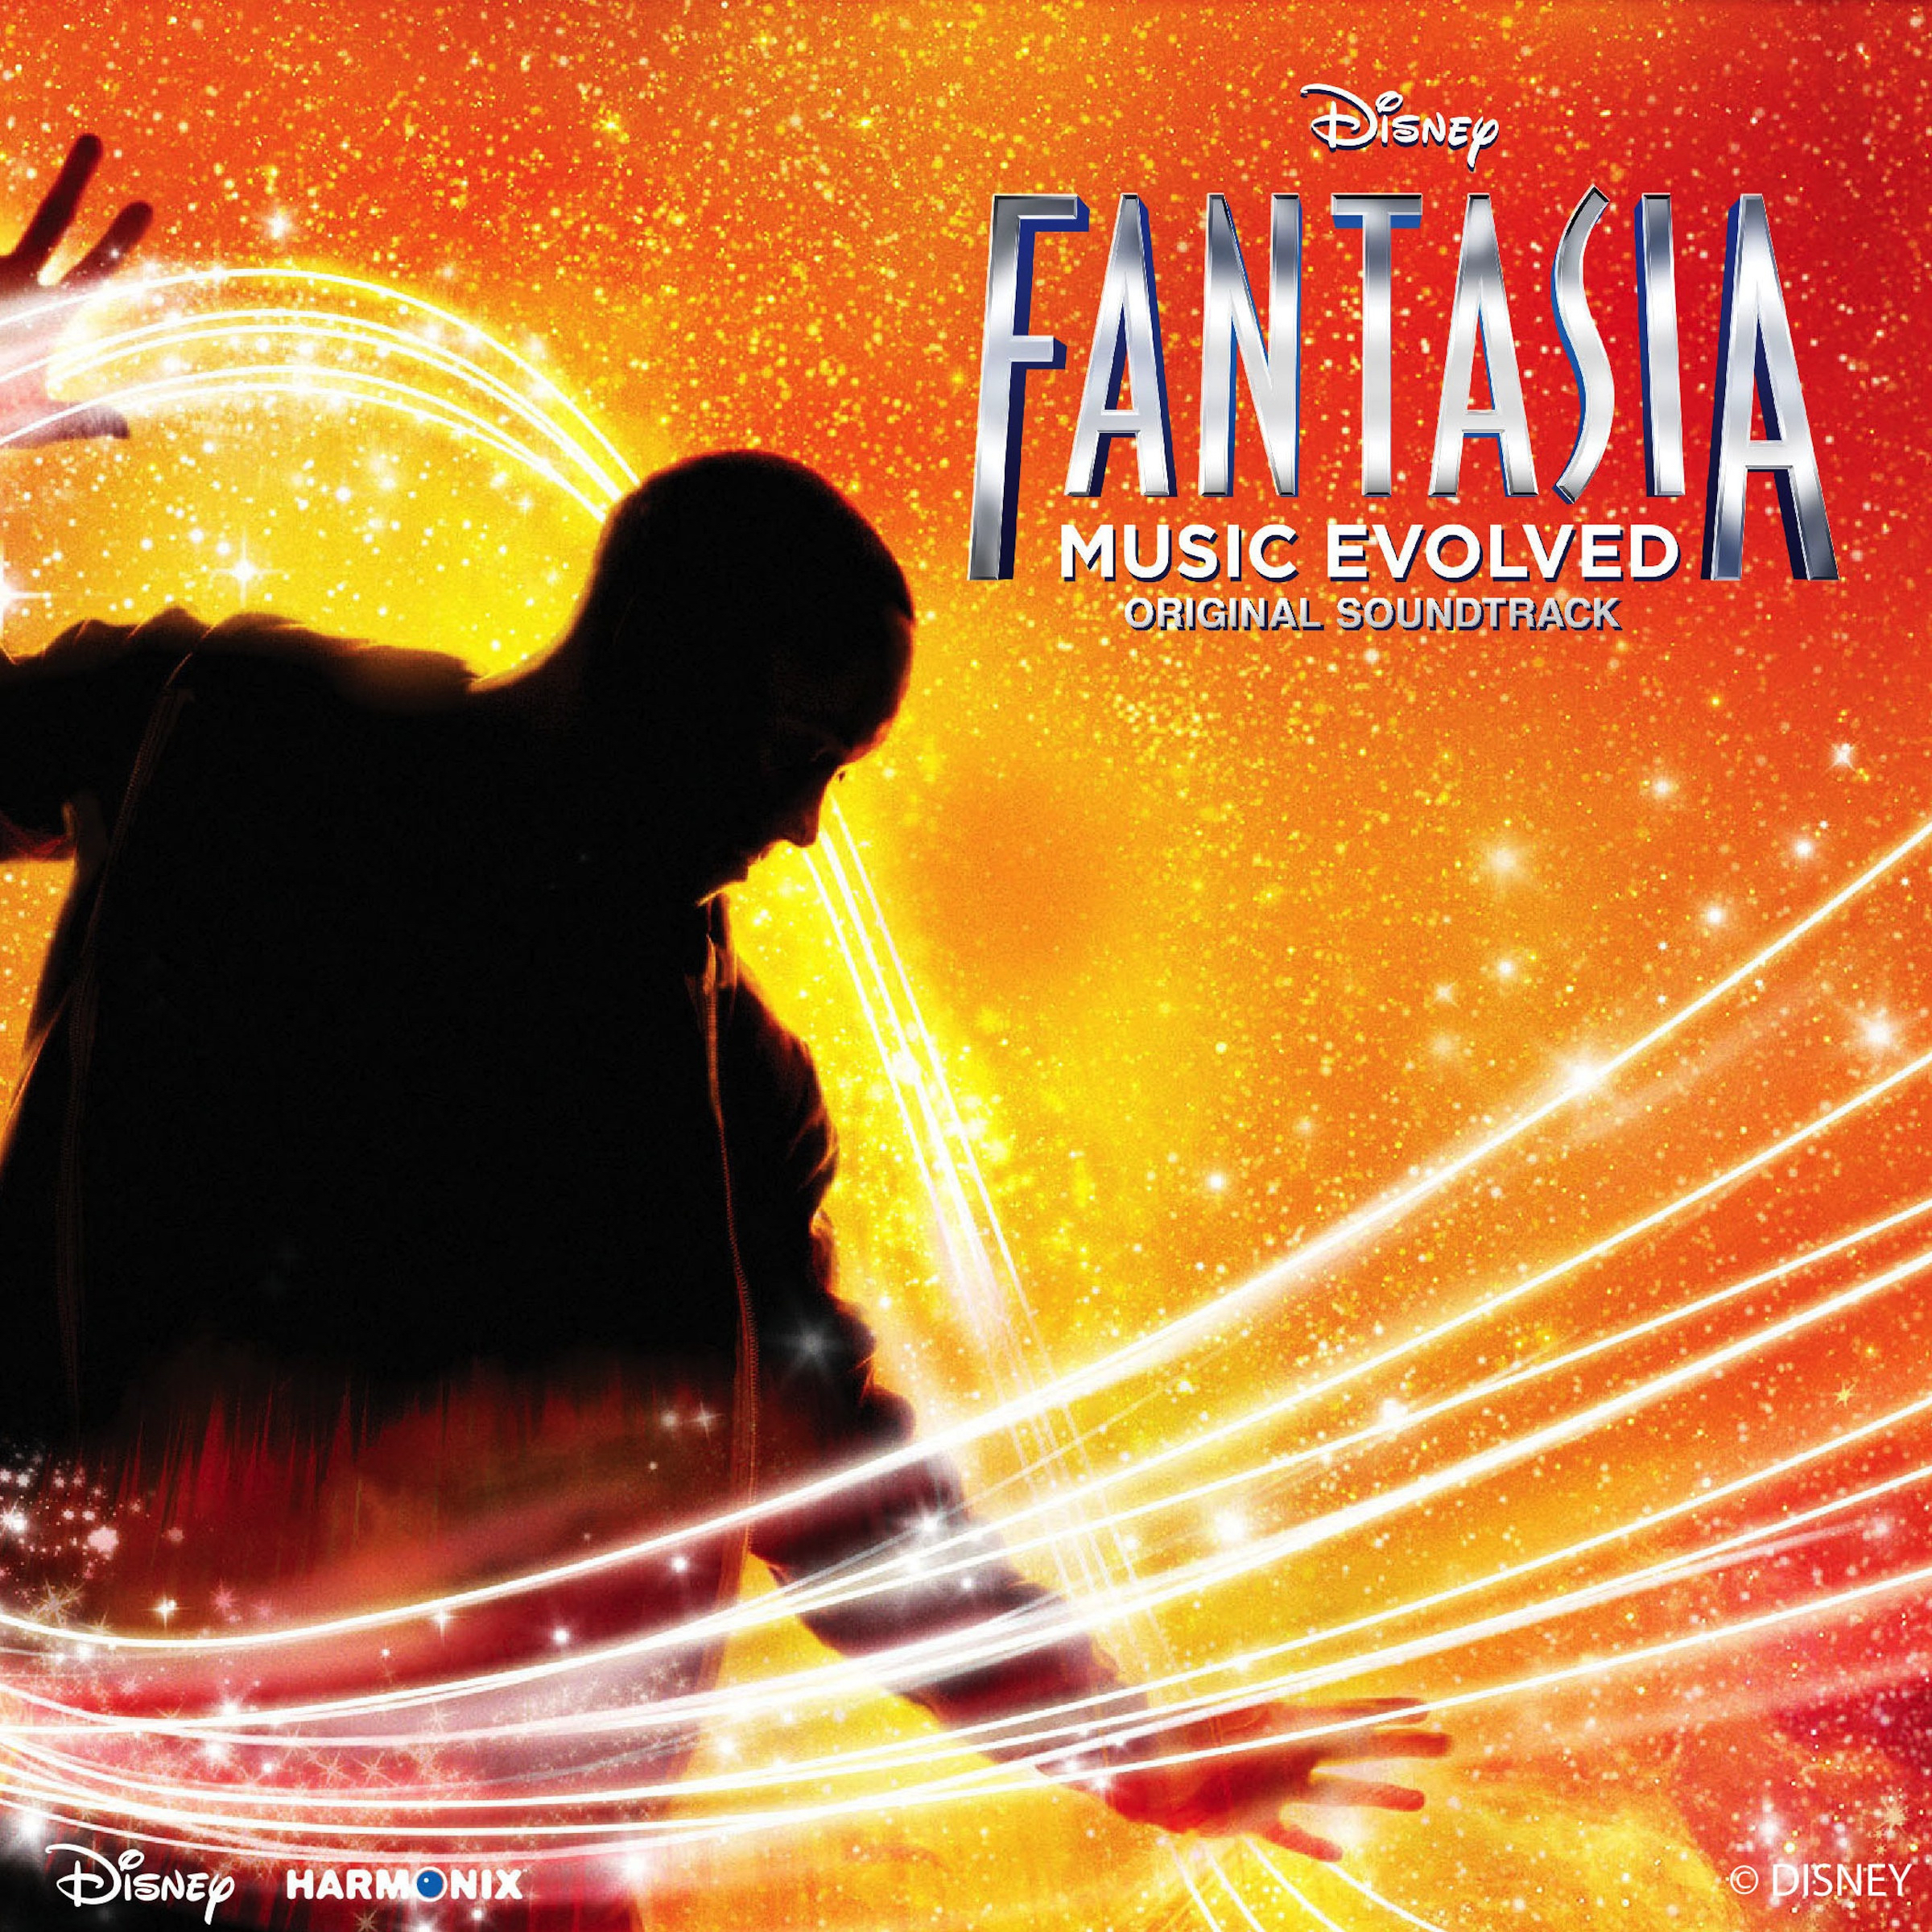 zondaar Vooruit Pardon Fantasia: Music Evolved Original Soundtrack (2014) MP3 - Download Fantasia:  Music Evolved Original Soundtrack (2014) Soundtracks for FREE!